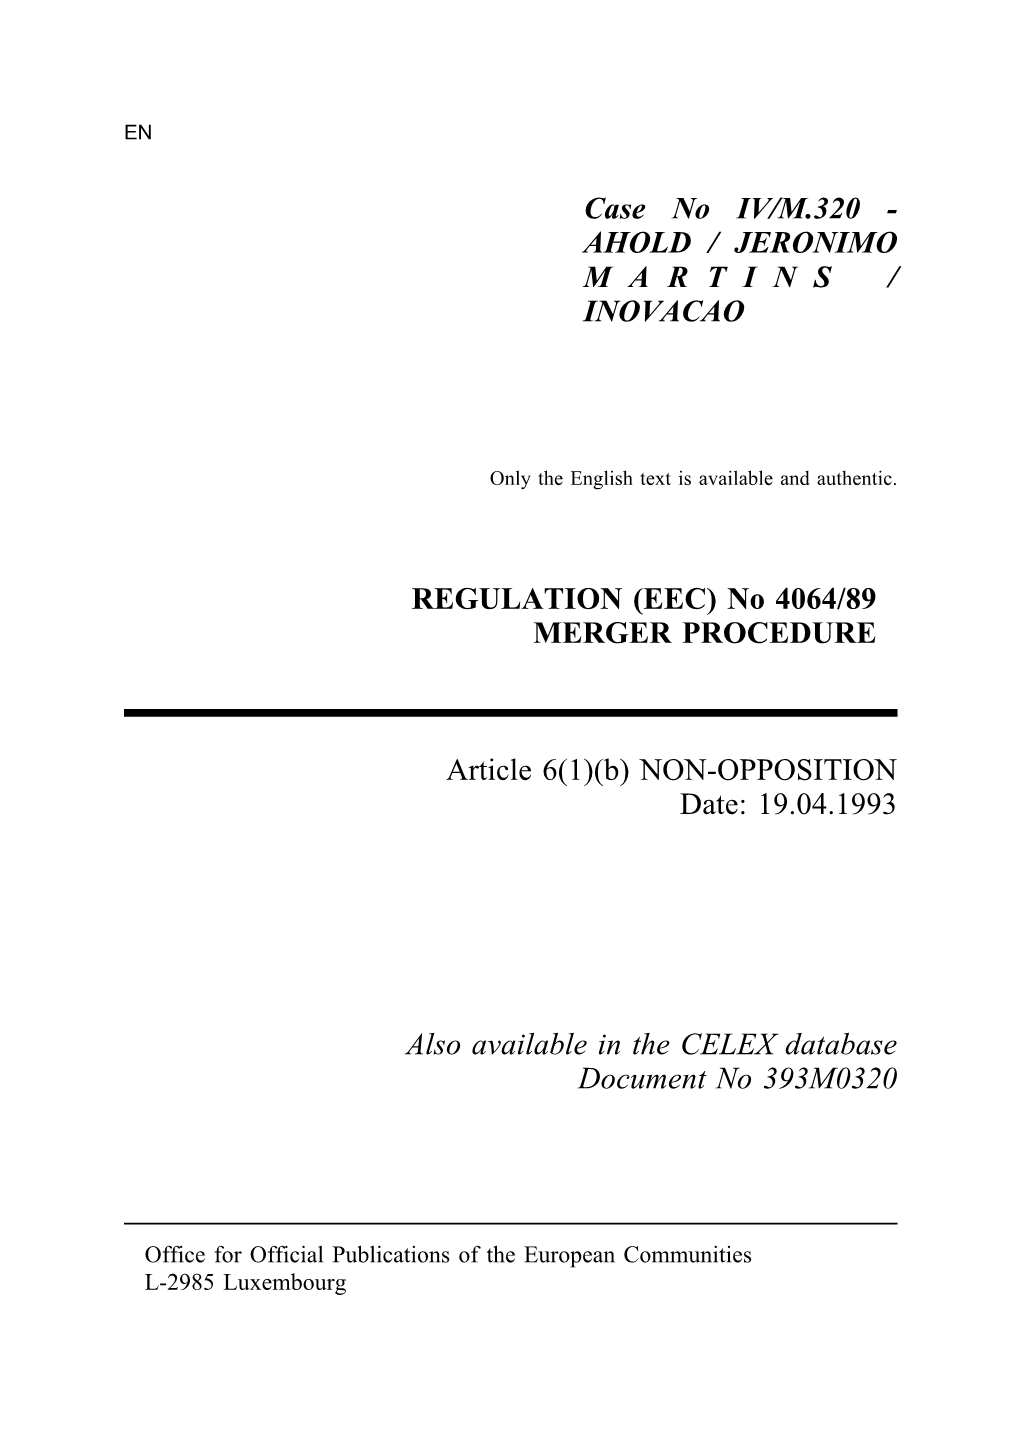 Merger Decision IV/M.320 of 19.04.1993